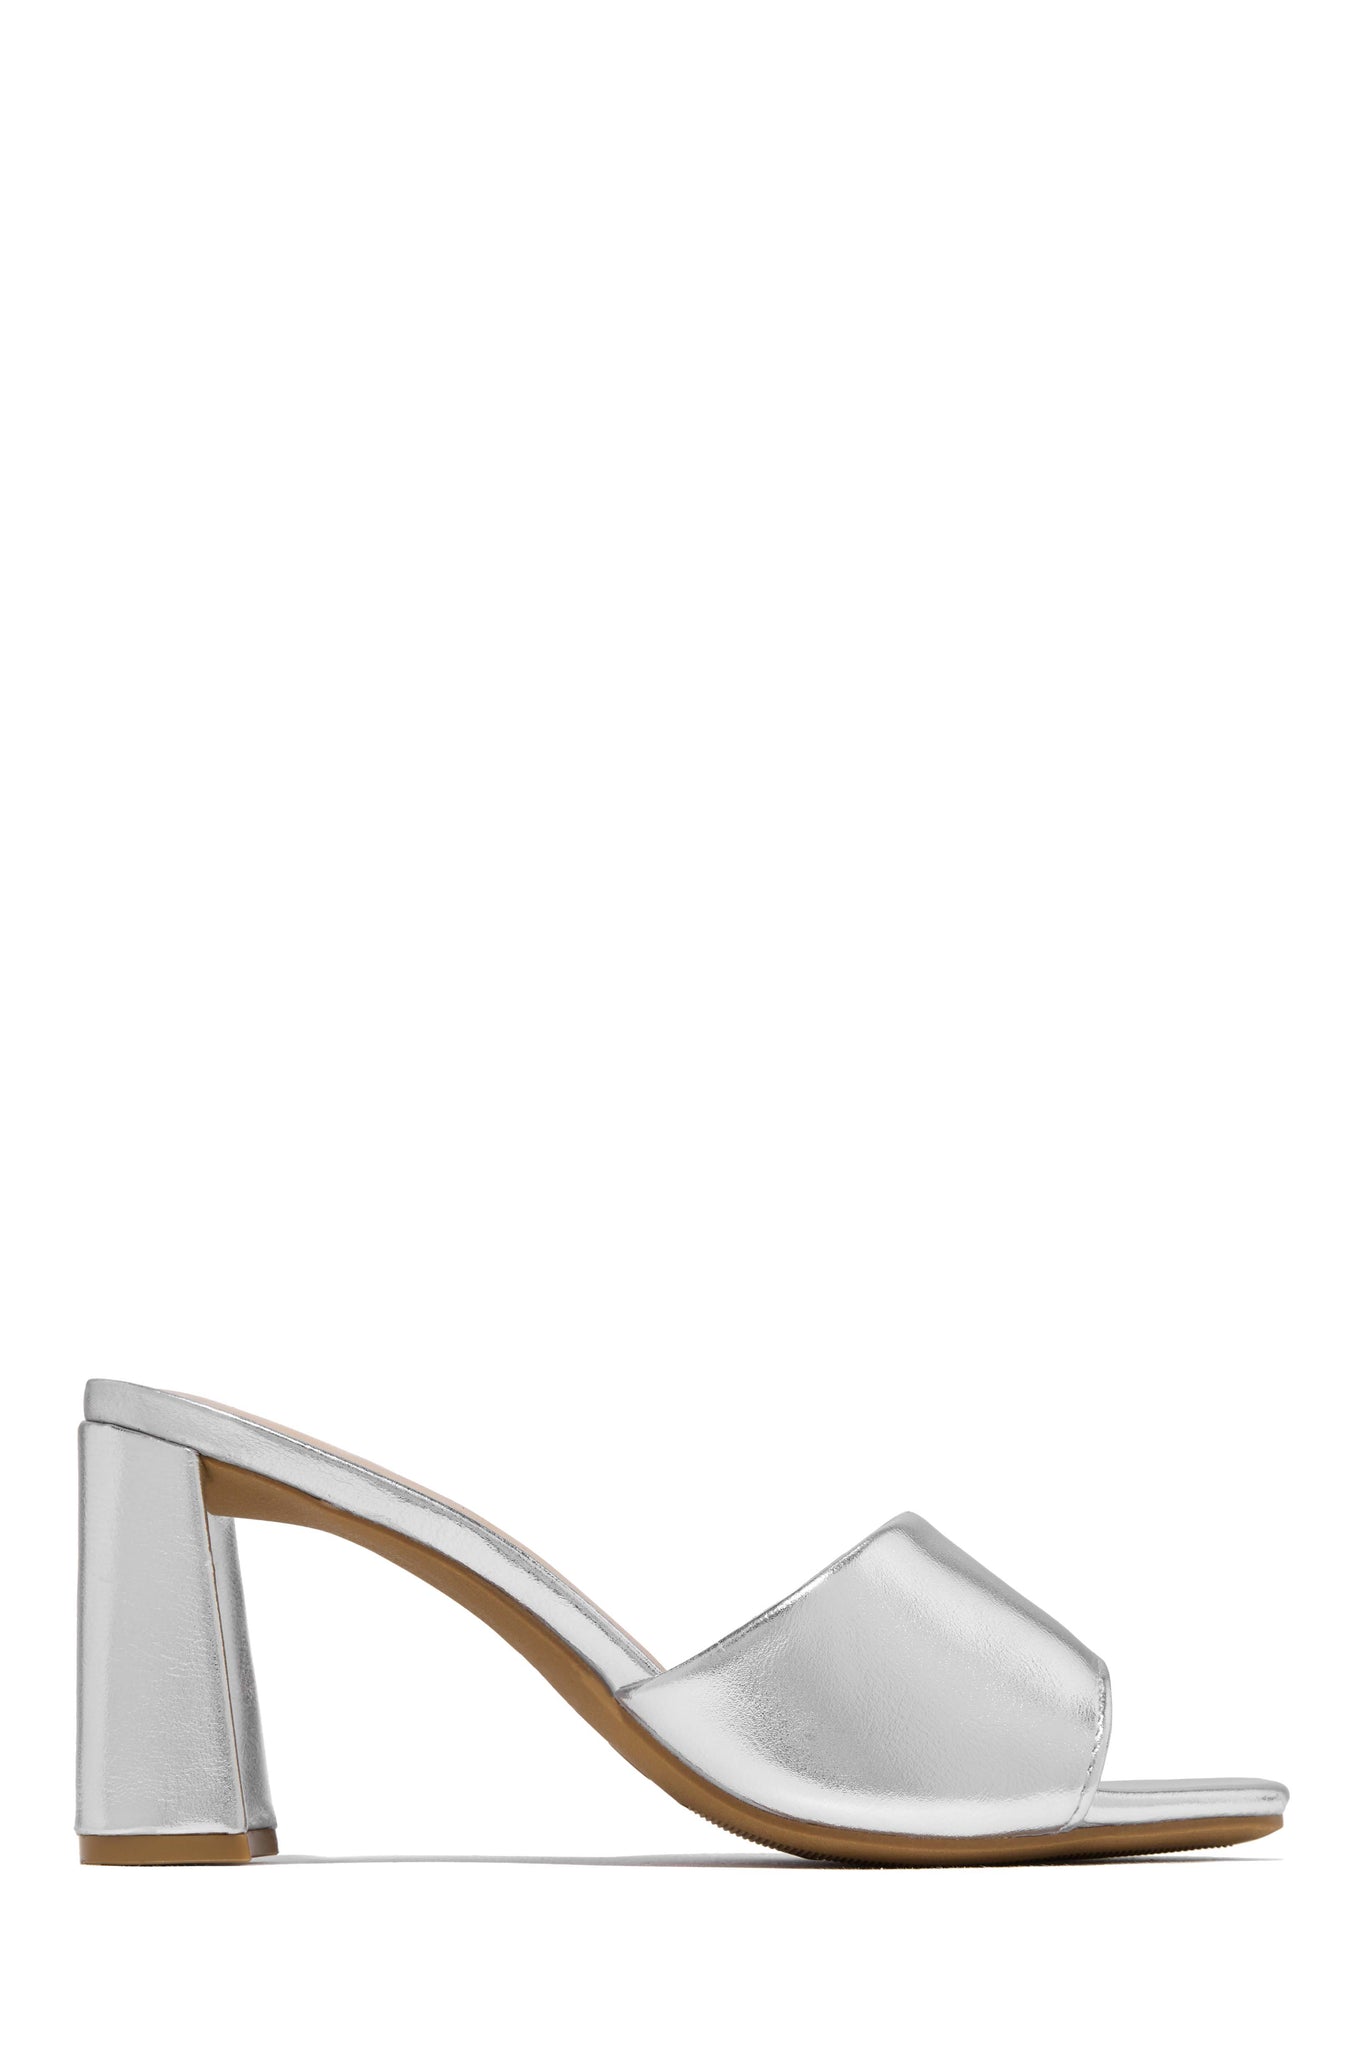 SIMMI Shoes Simmi London Heidi Reflective Grey Block Heeled Sandals, $18 |  Asos | Lookastic